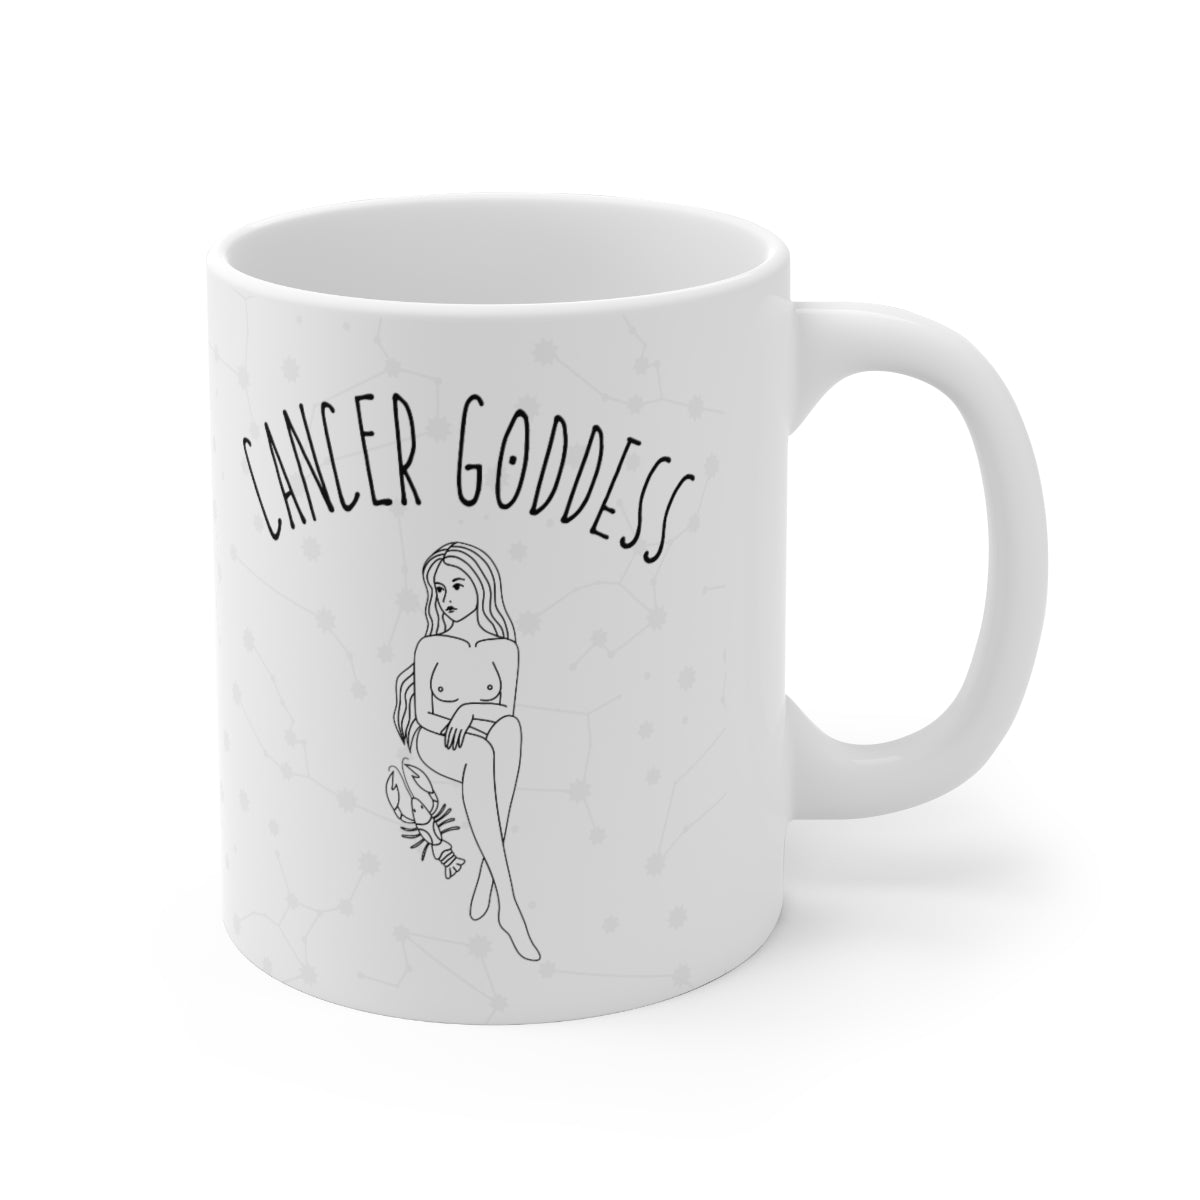 Cancer Goddess Mug 4